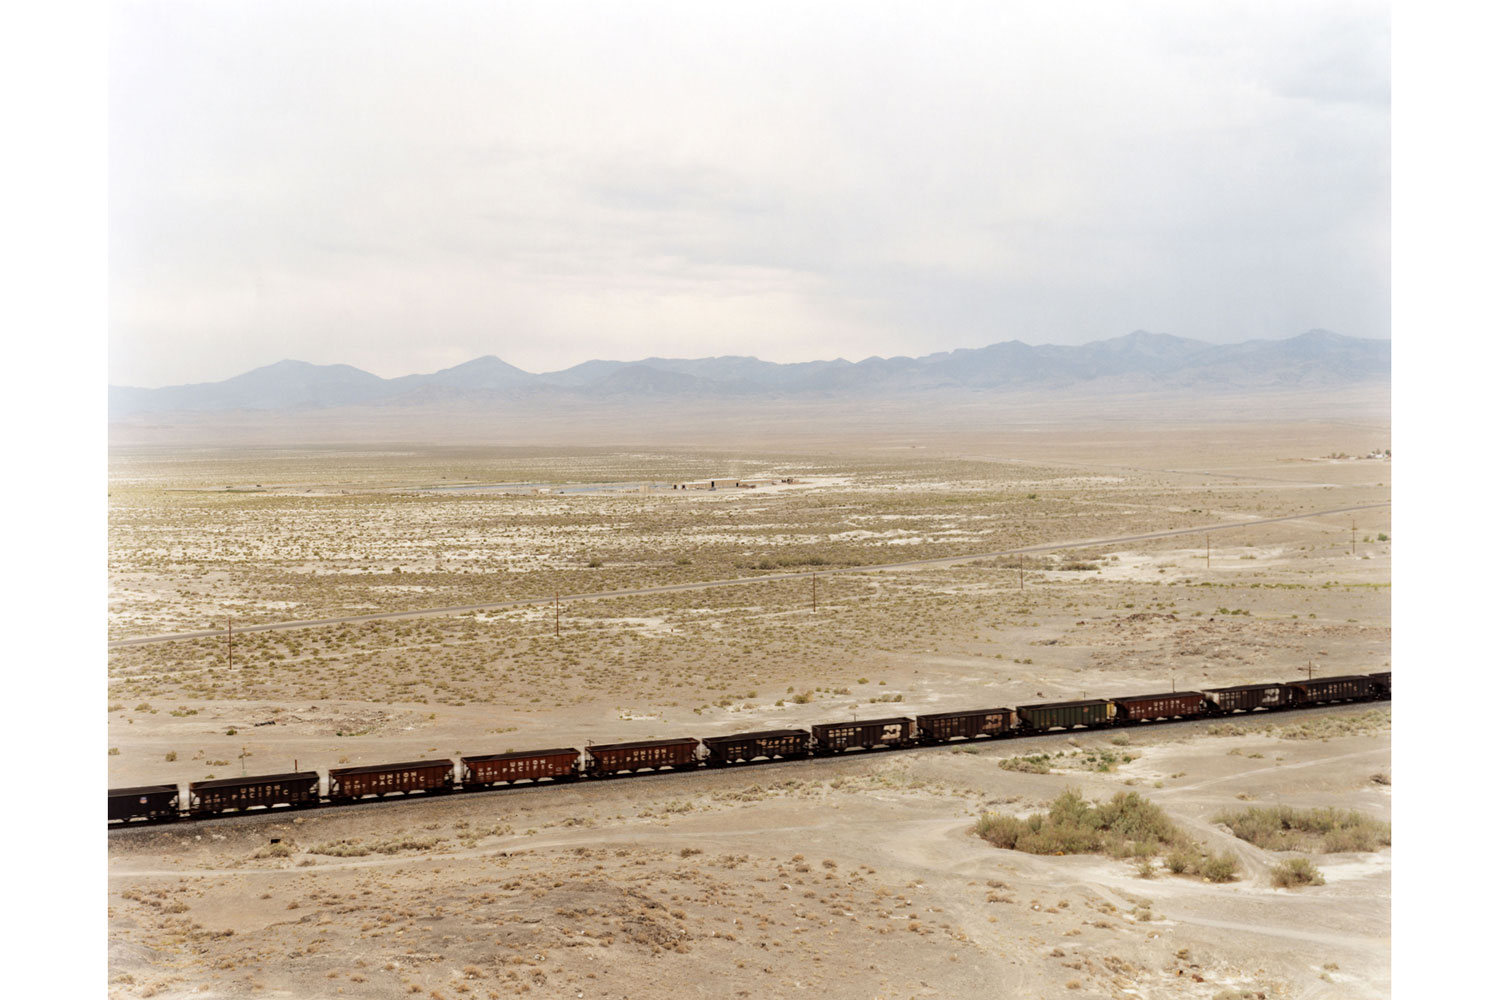 Untitled (Train on salt flats), Great Salt Lake Desert, Utah, 2002